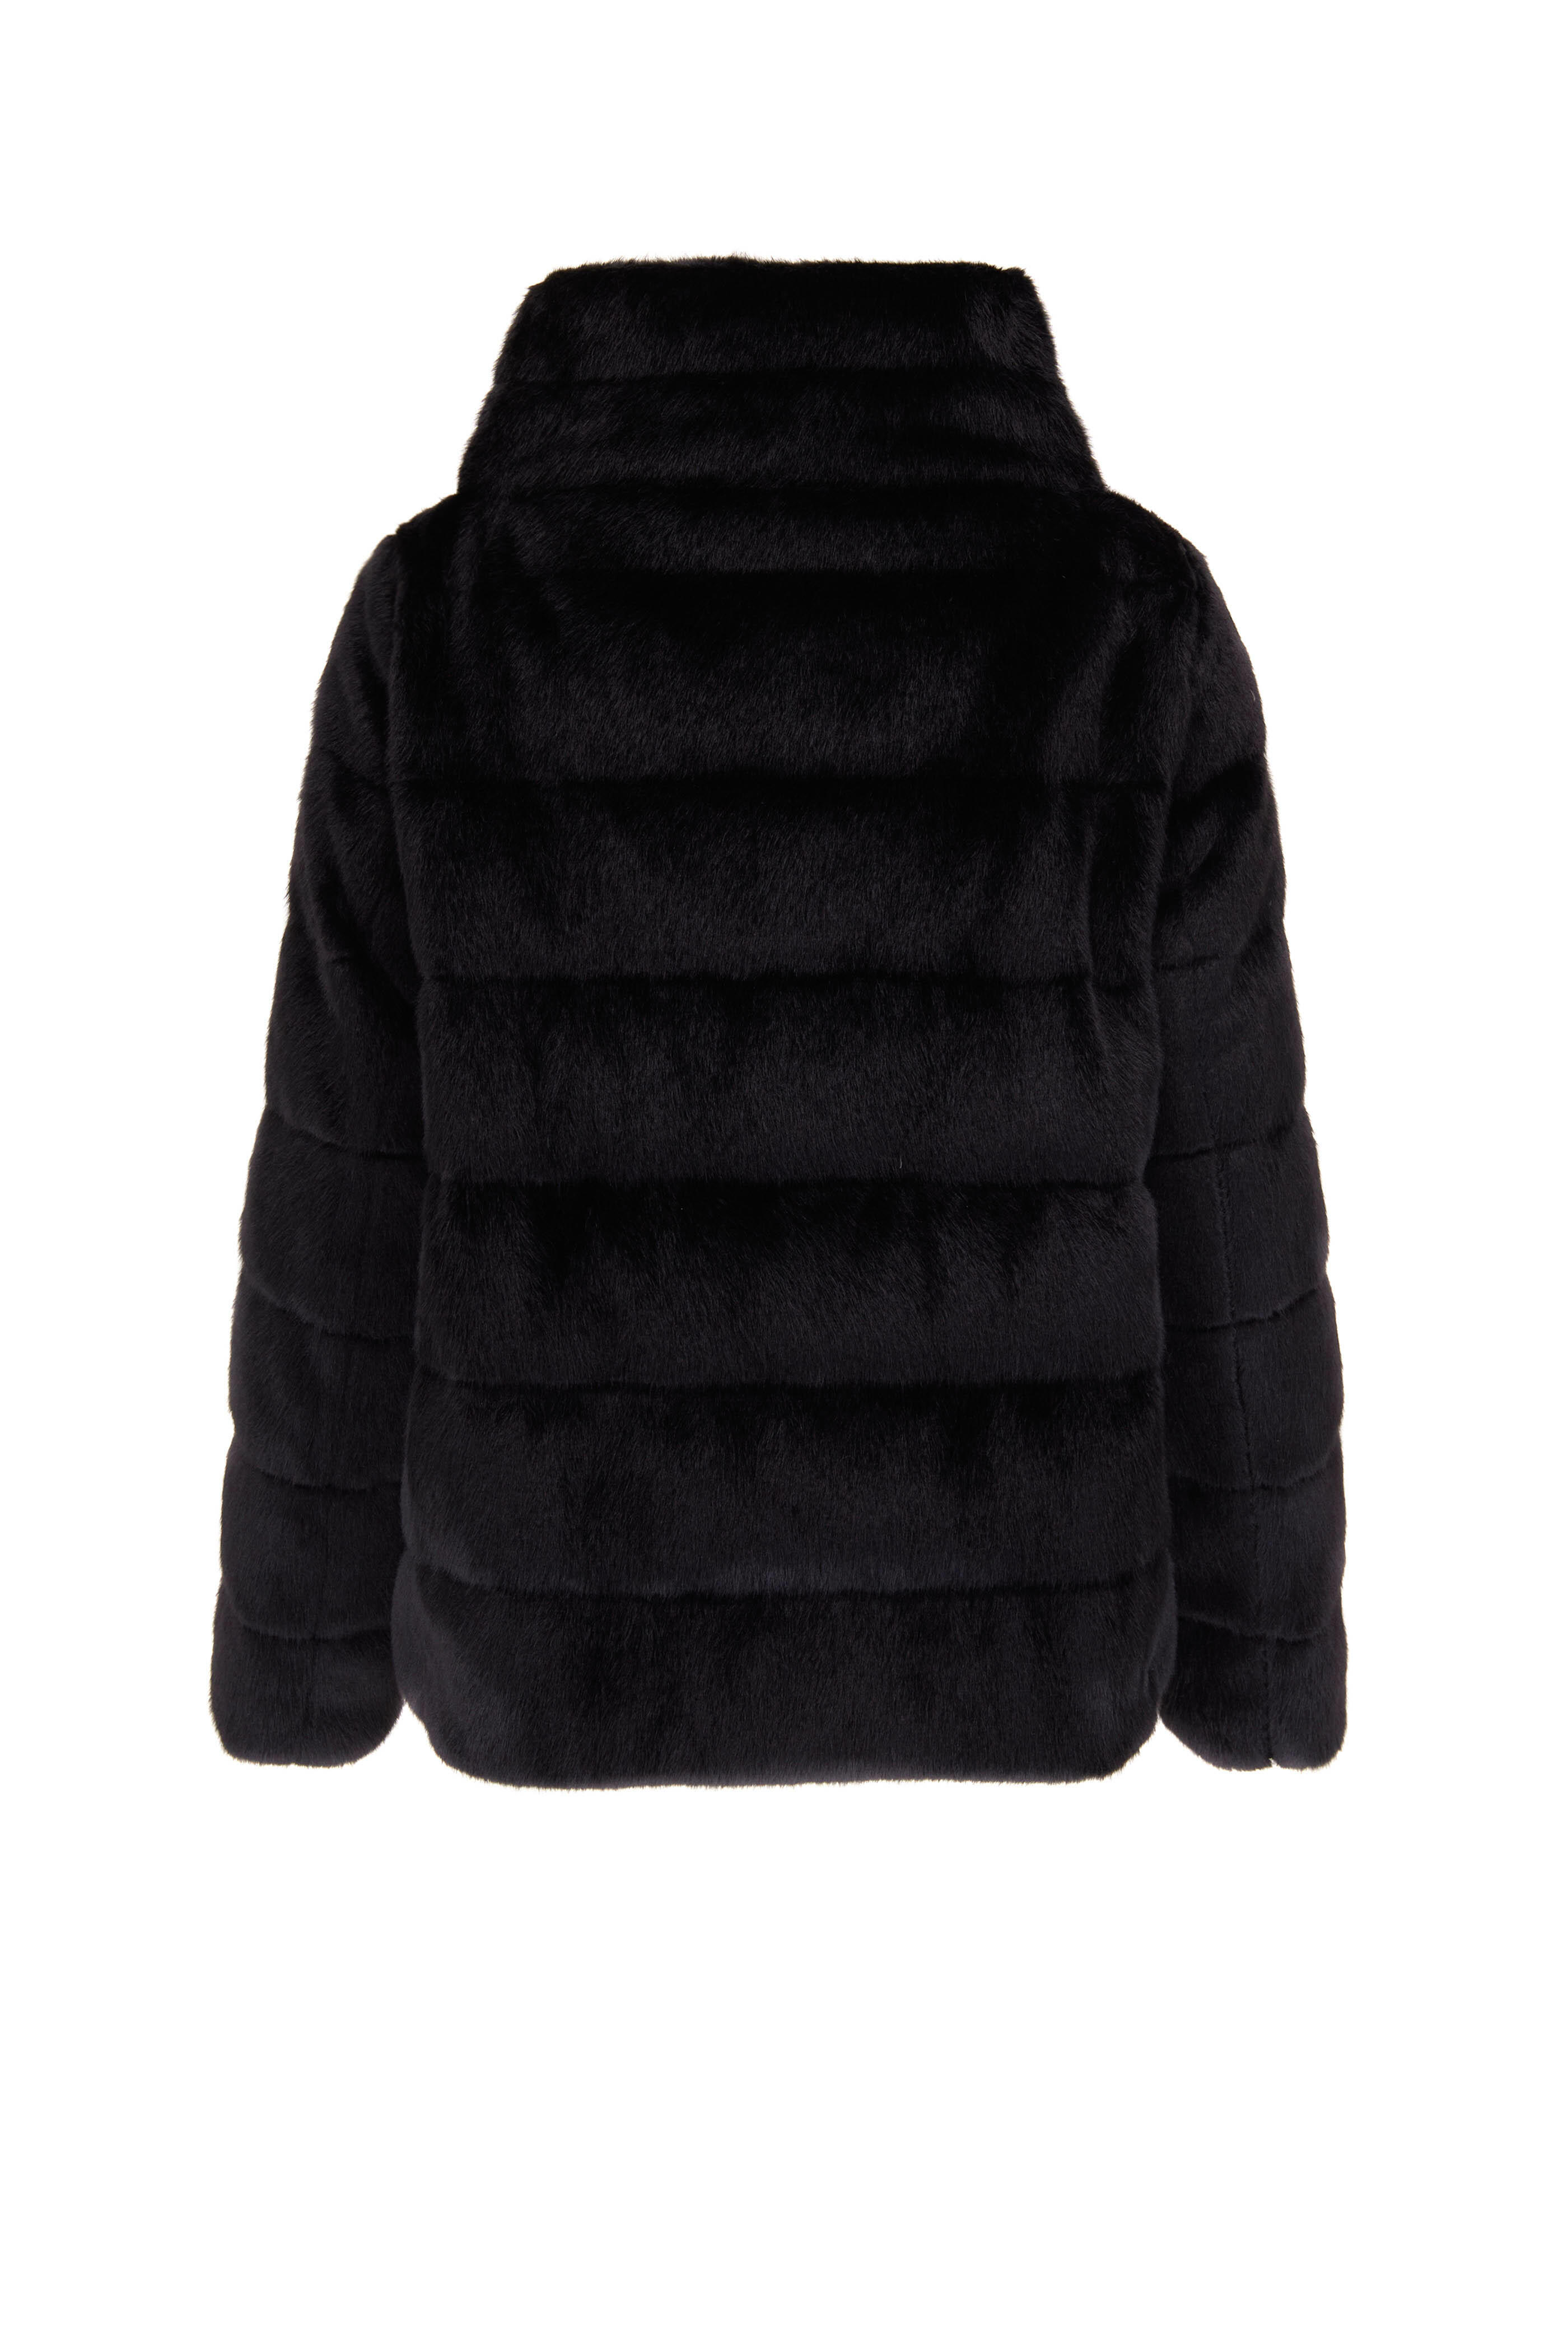 Herno - Black Faux Fur Down Teddy Coat